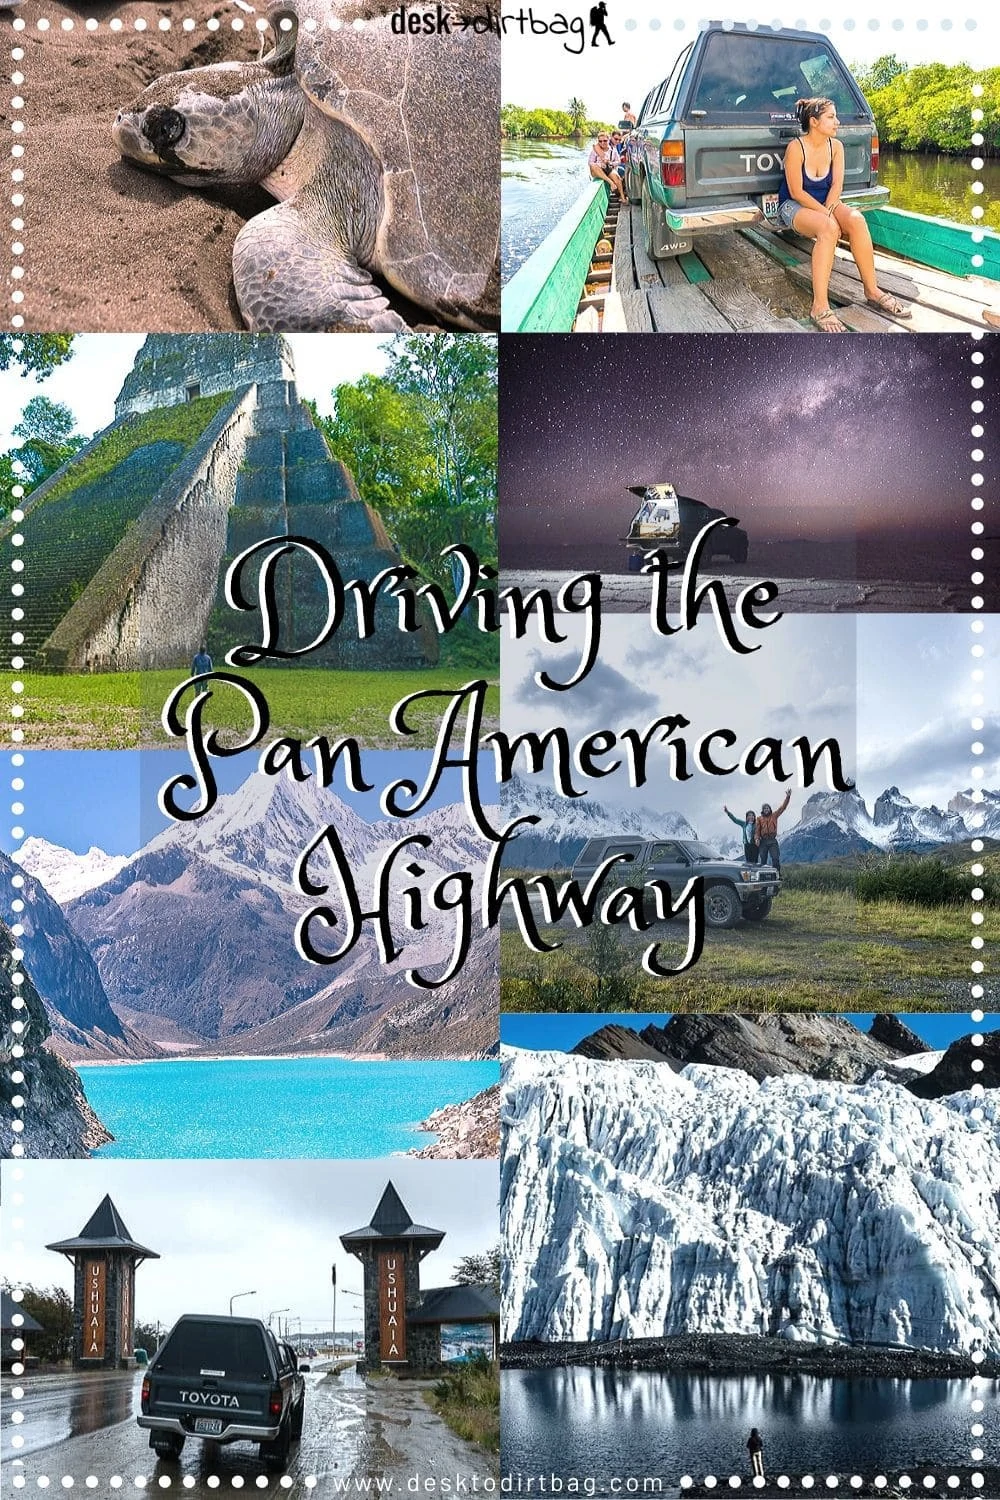 https://www.desktodirtbag.com/wp-content/uploads/2017/05/The-ultimate-road-trip-driving-the-Pan-American-Highway.webp